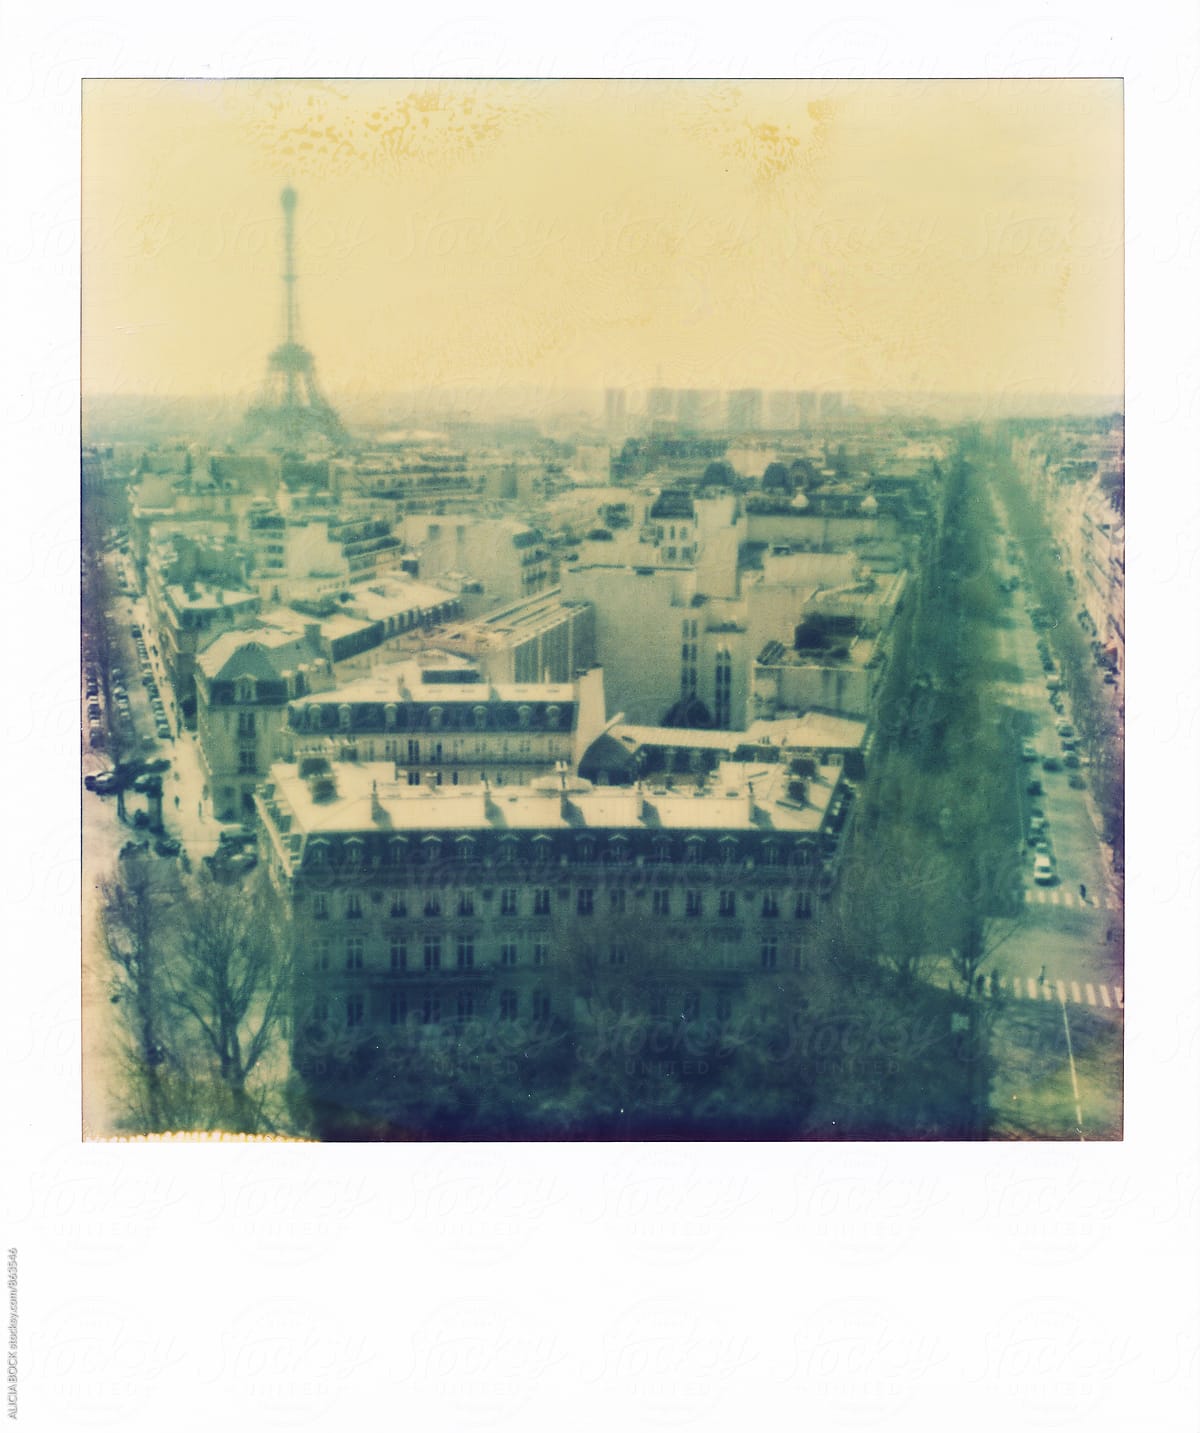 Polaroid Looking Across The City Of Paris, France Towards The Eiffel Tower